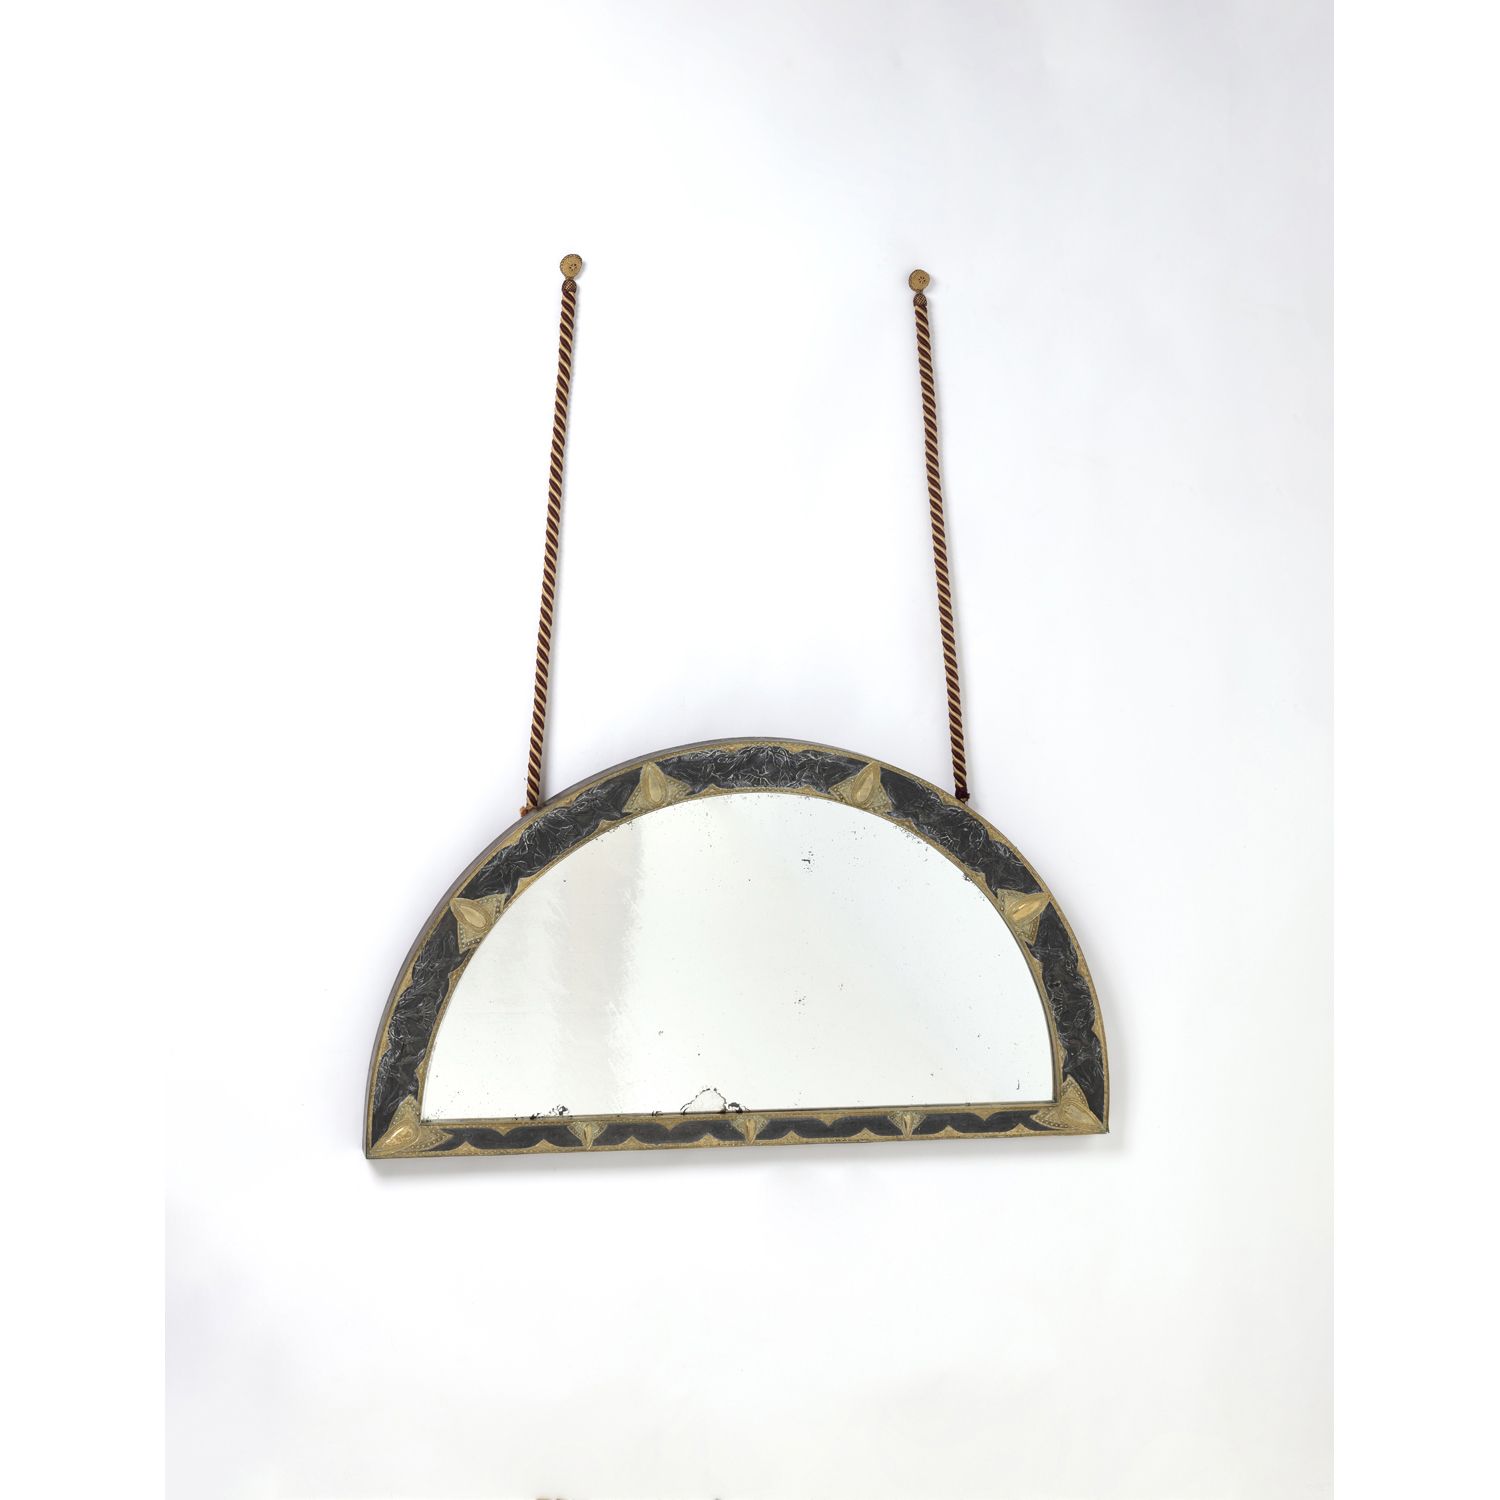 Null 国外工作（第20届

镜子，约1900年

黄铜、锡器和纺织品

高80×宽151×深5.5厘米